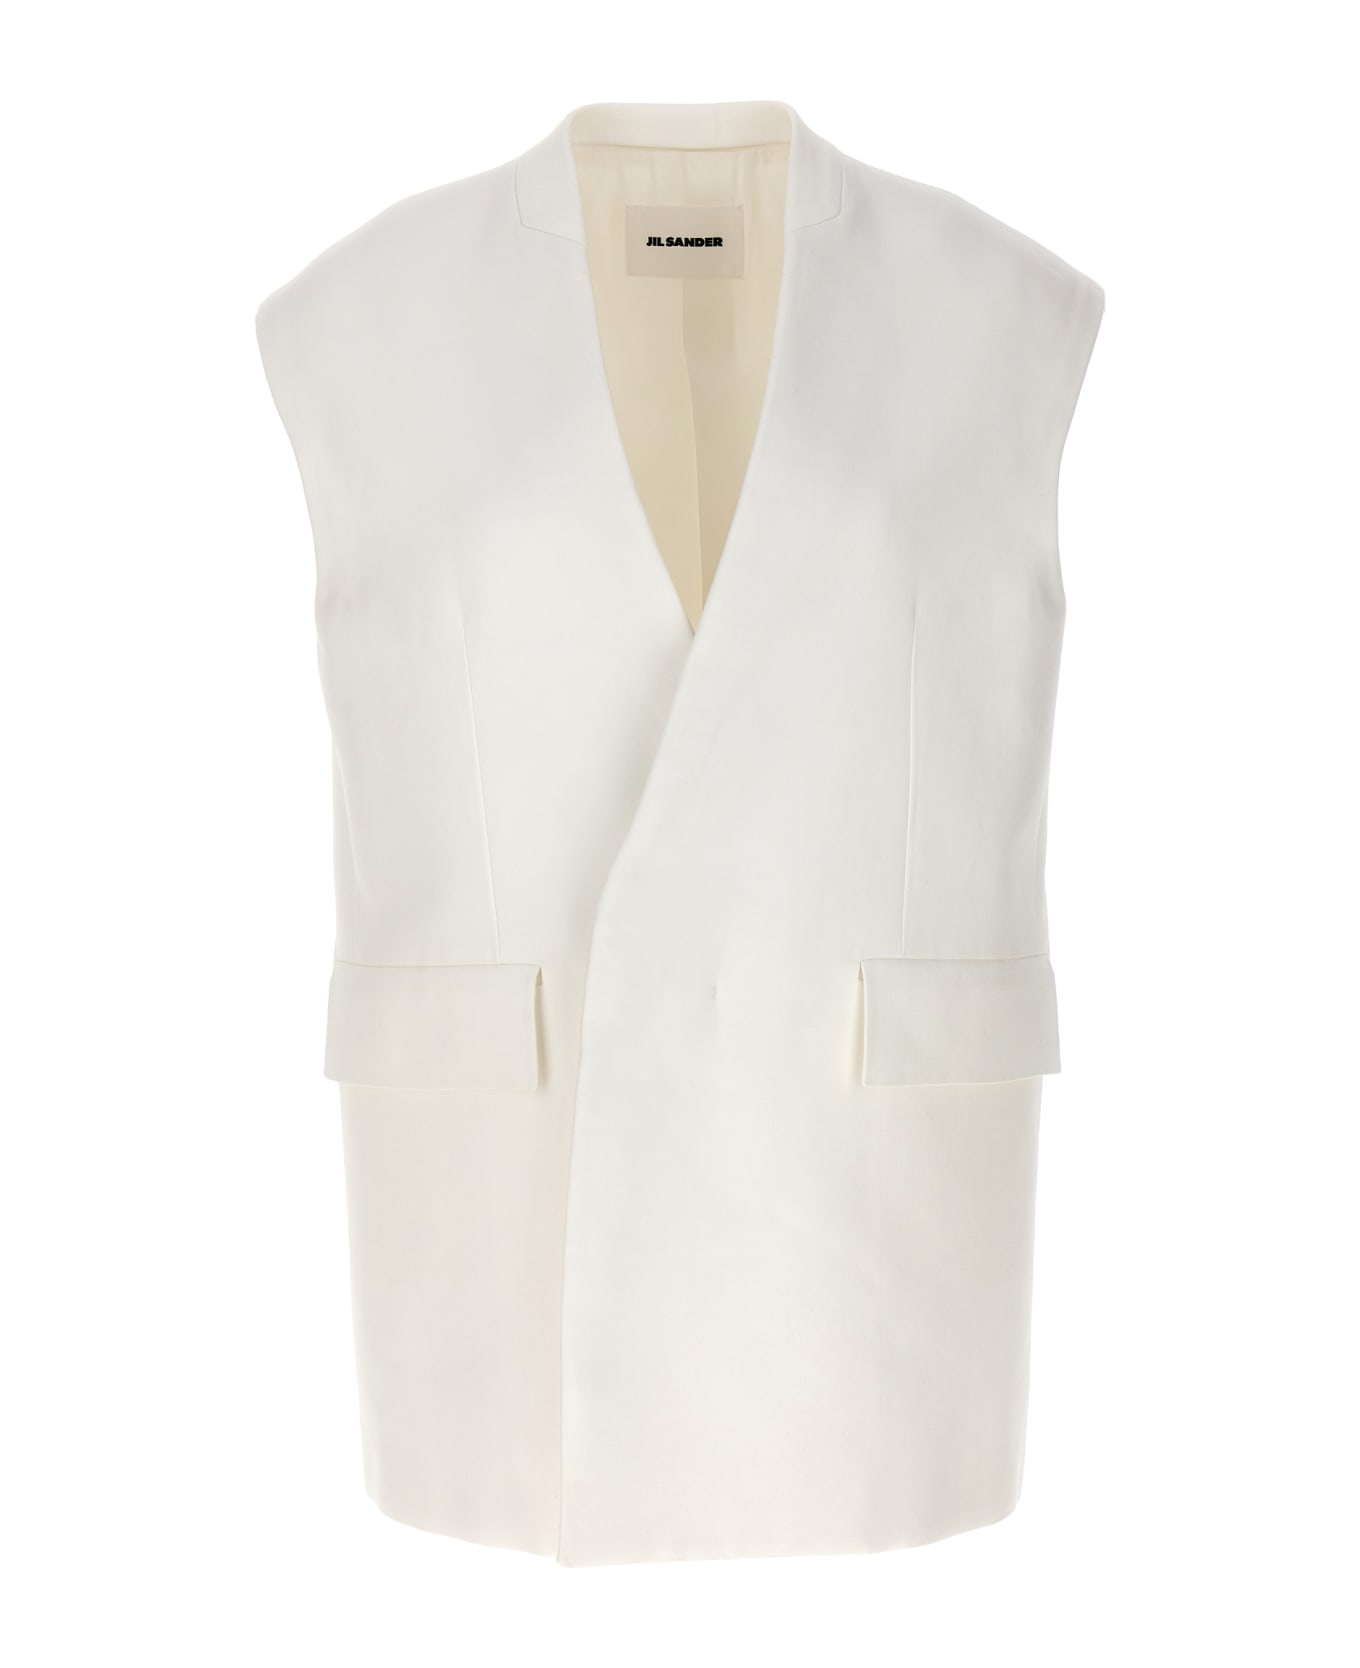 Jil Sander Oversize Tailored Vest - White